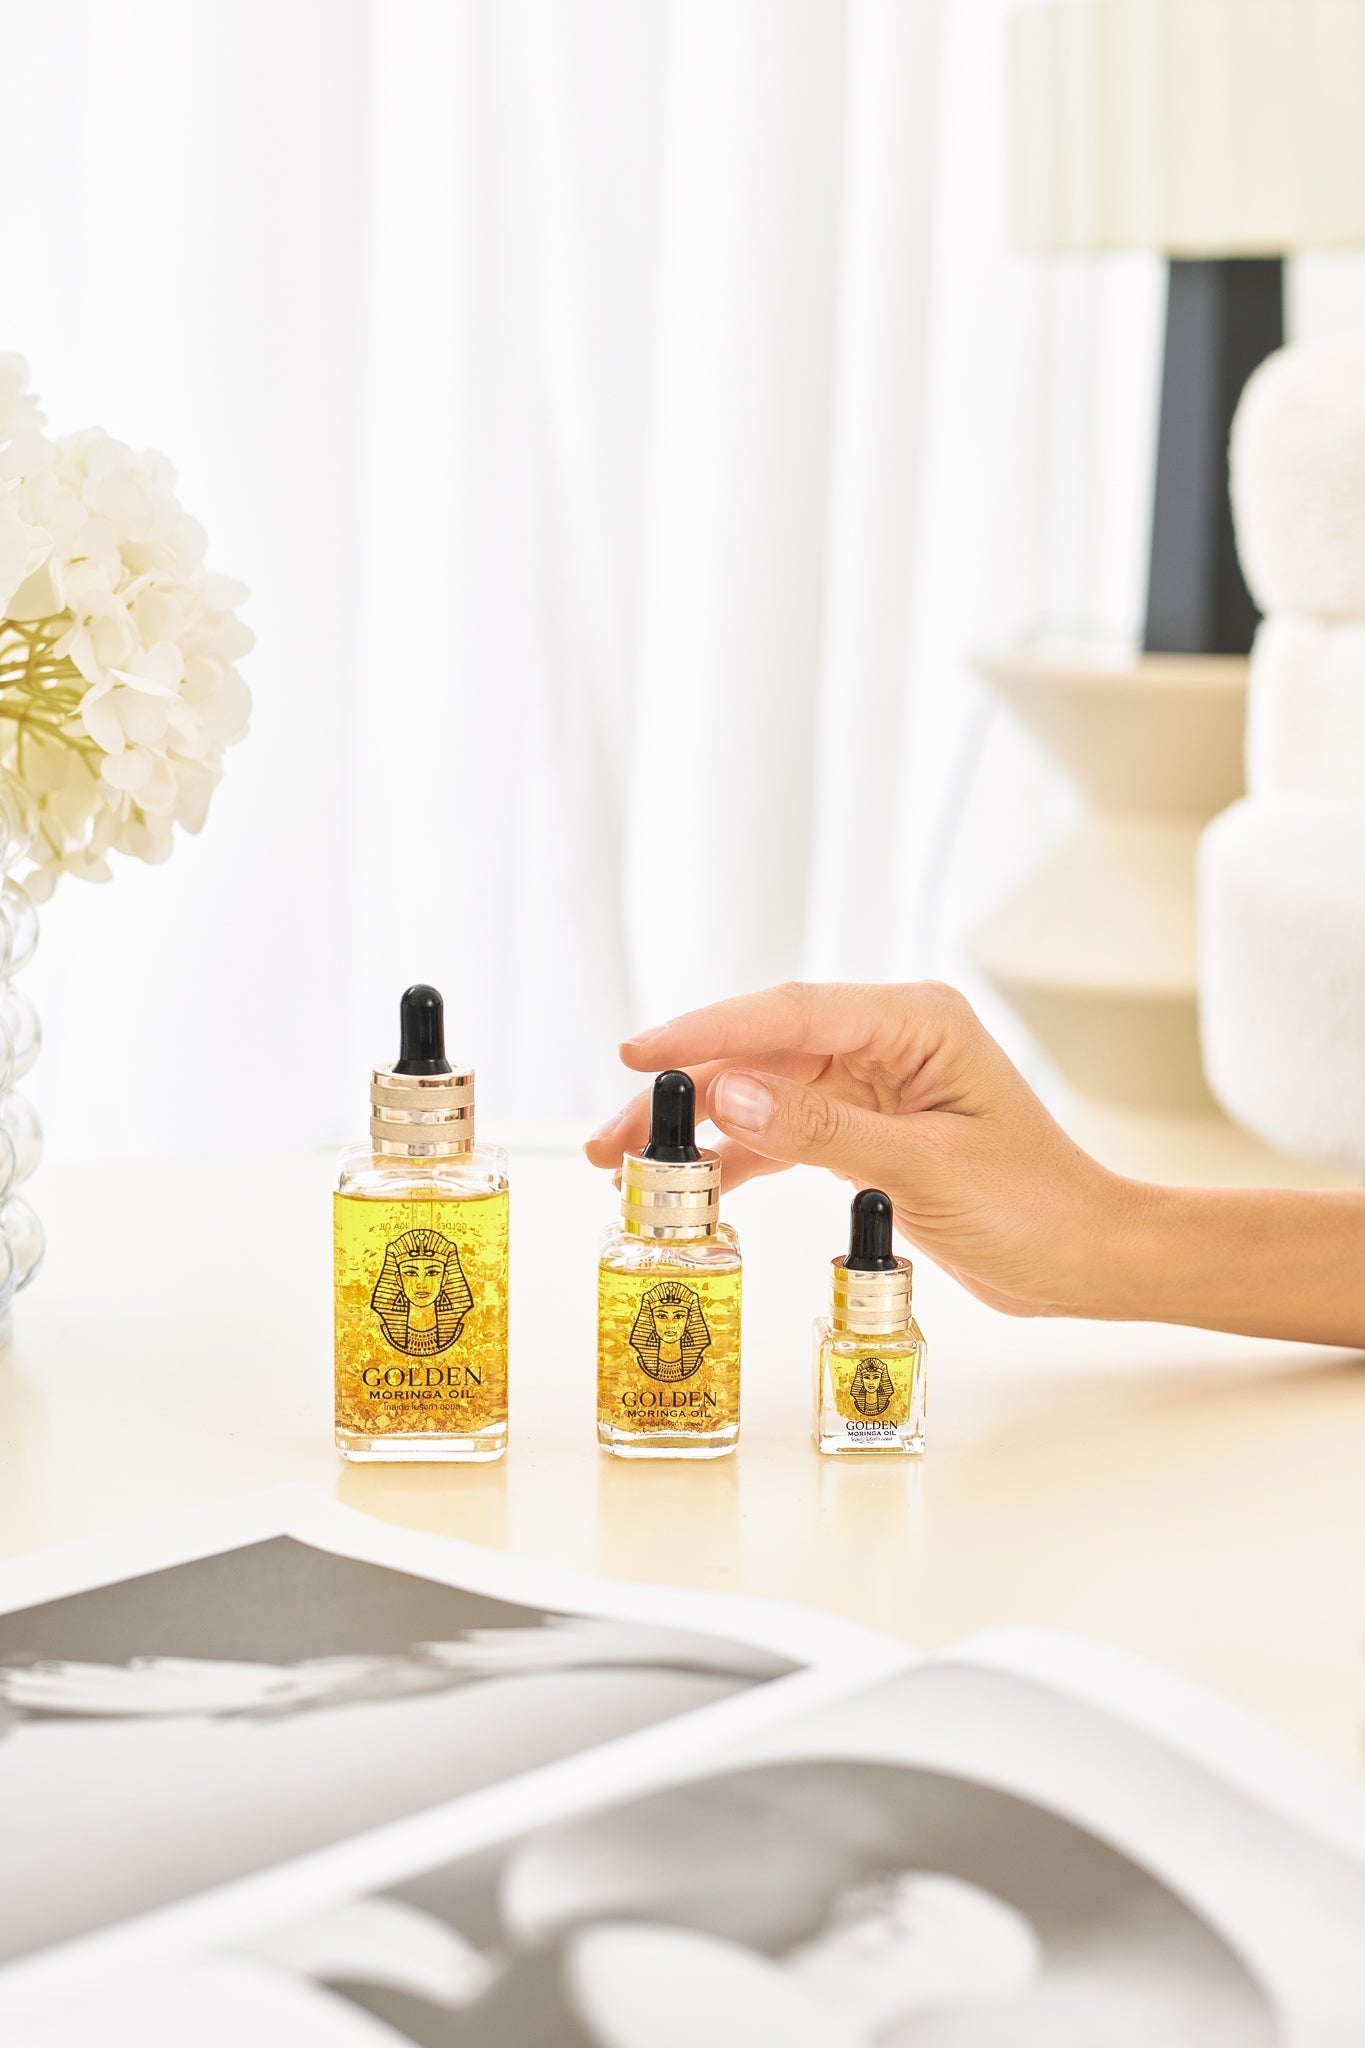 Panya Natural Golden Moringa Oil: Luxurious, rejuvenating organic Thai moringa oil skincare with real 24k gold